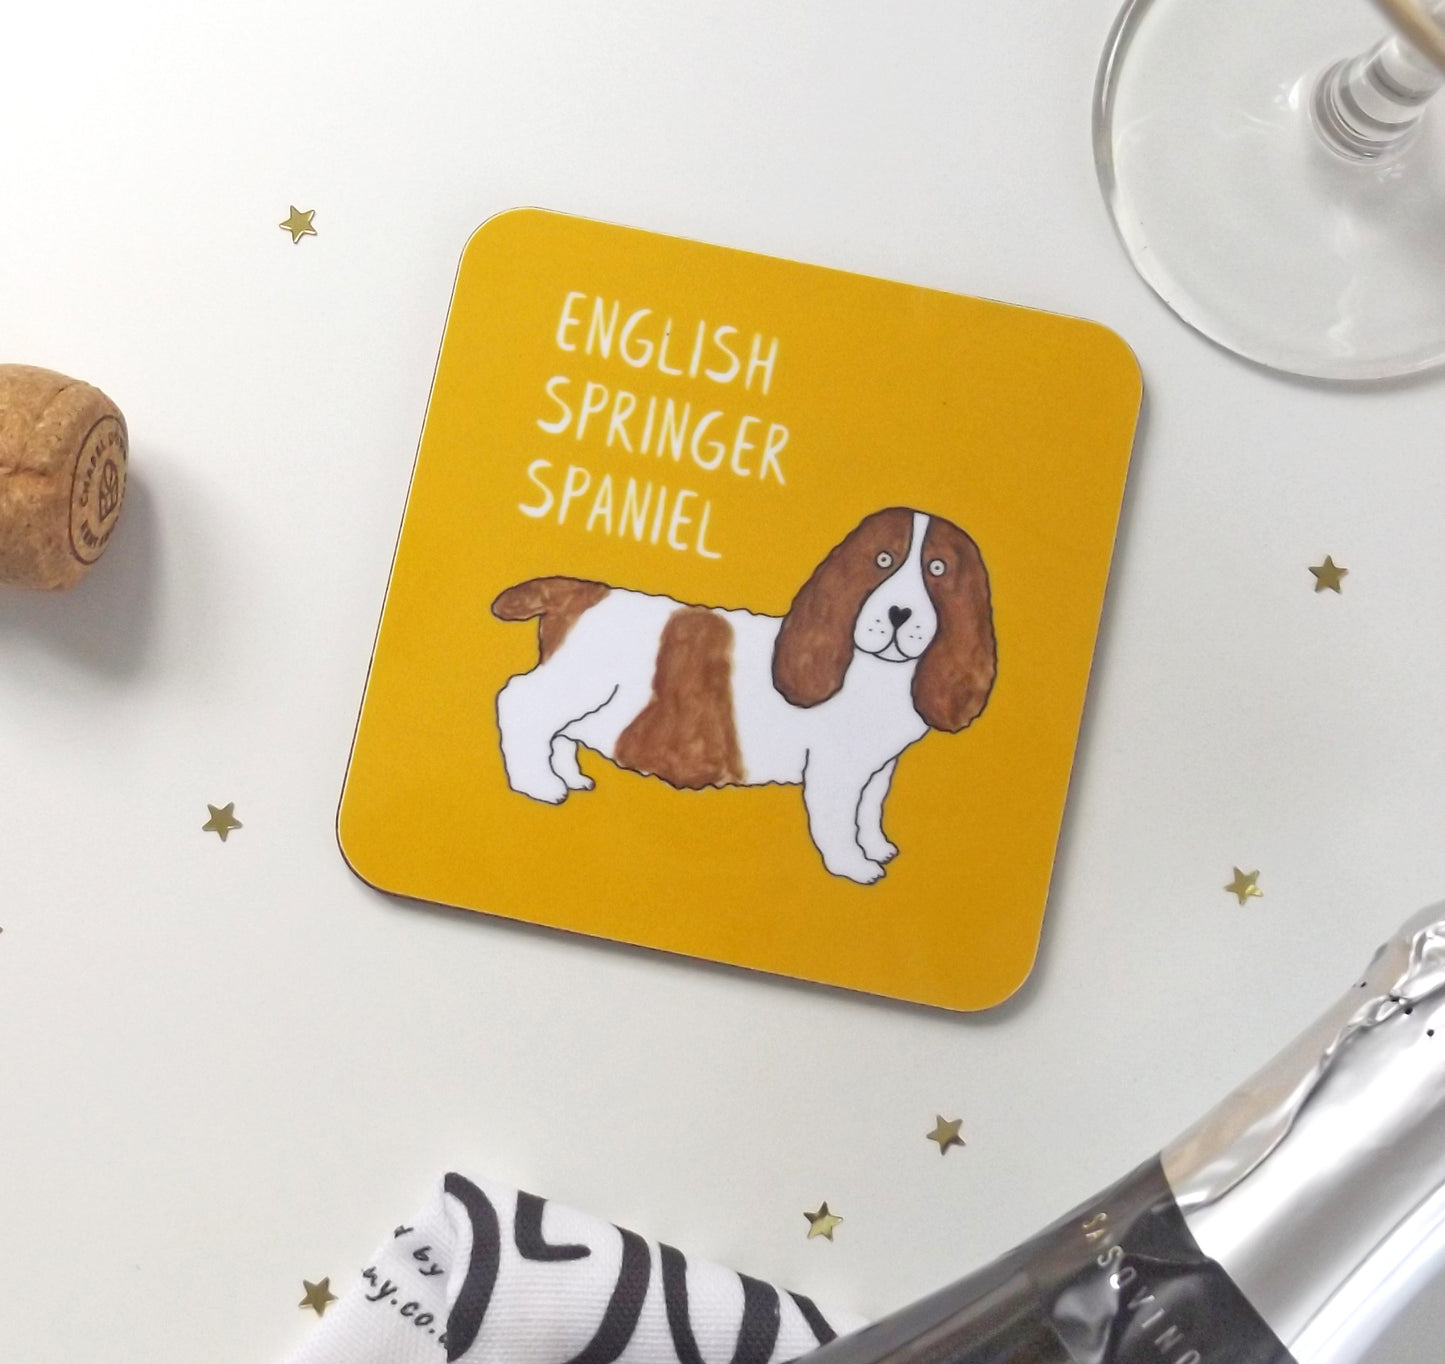 Illustrated English Springer Spaniel drinks coaster